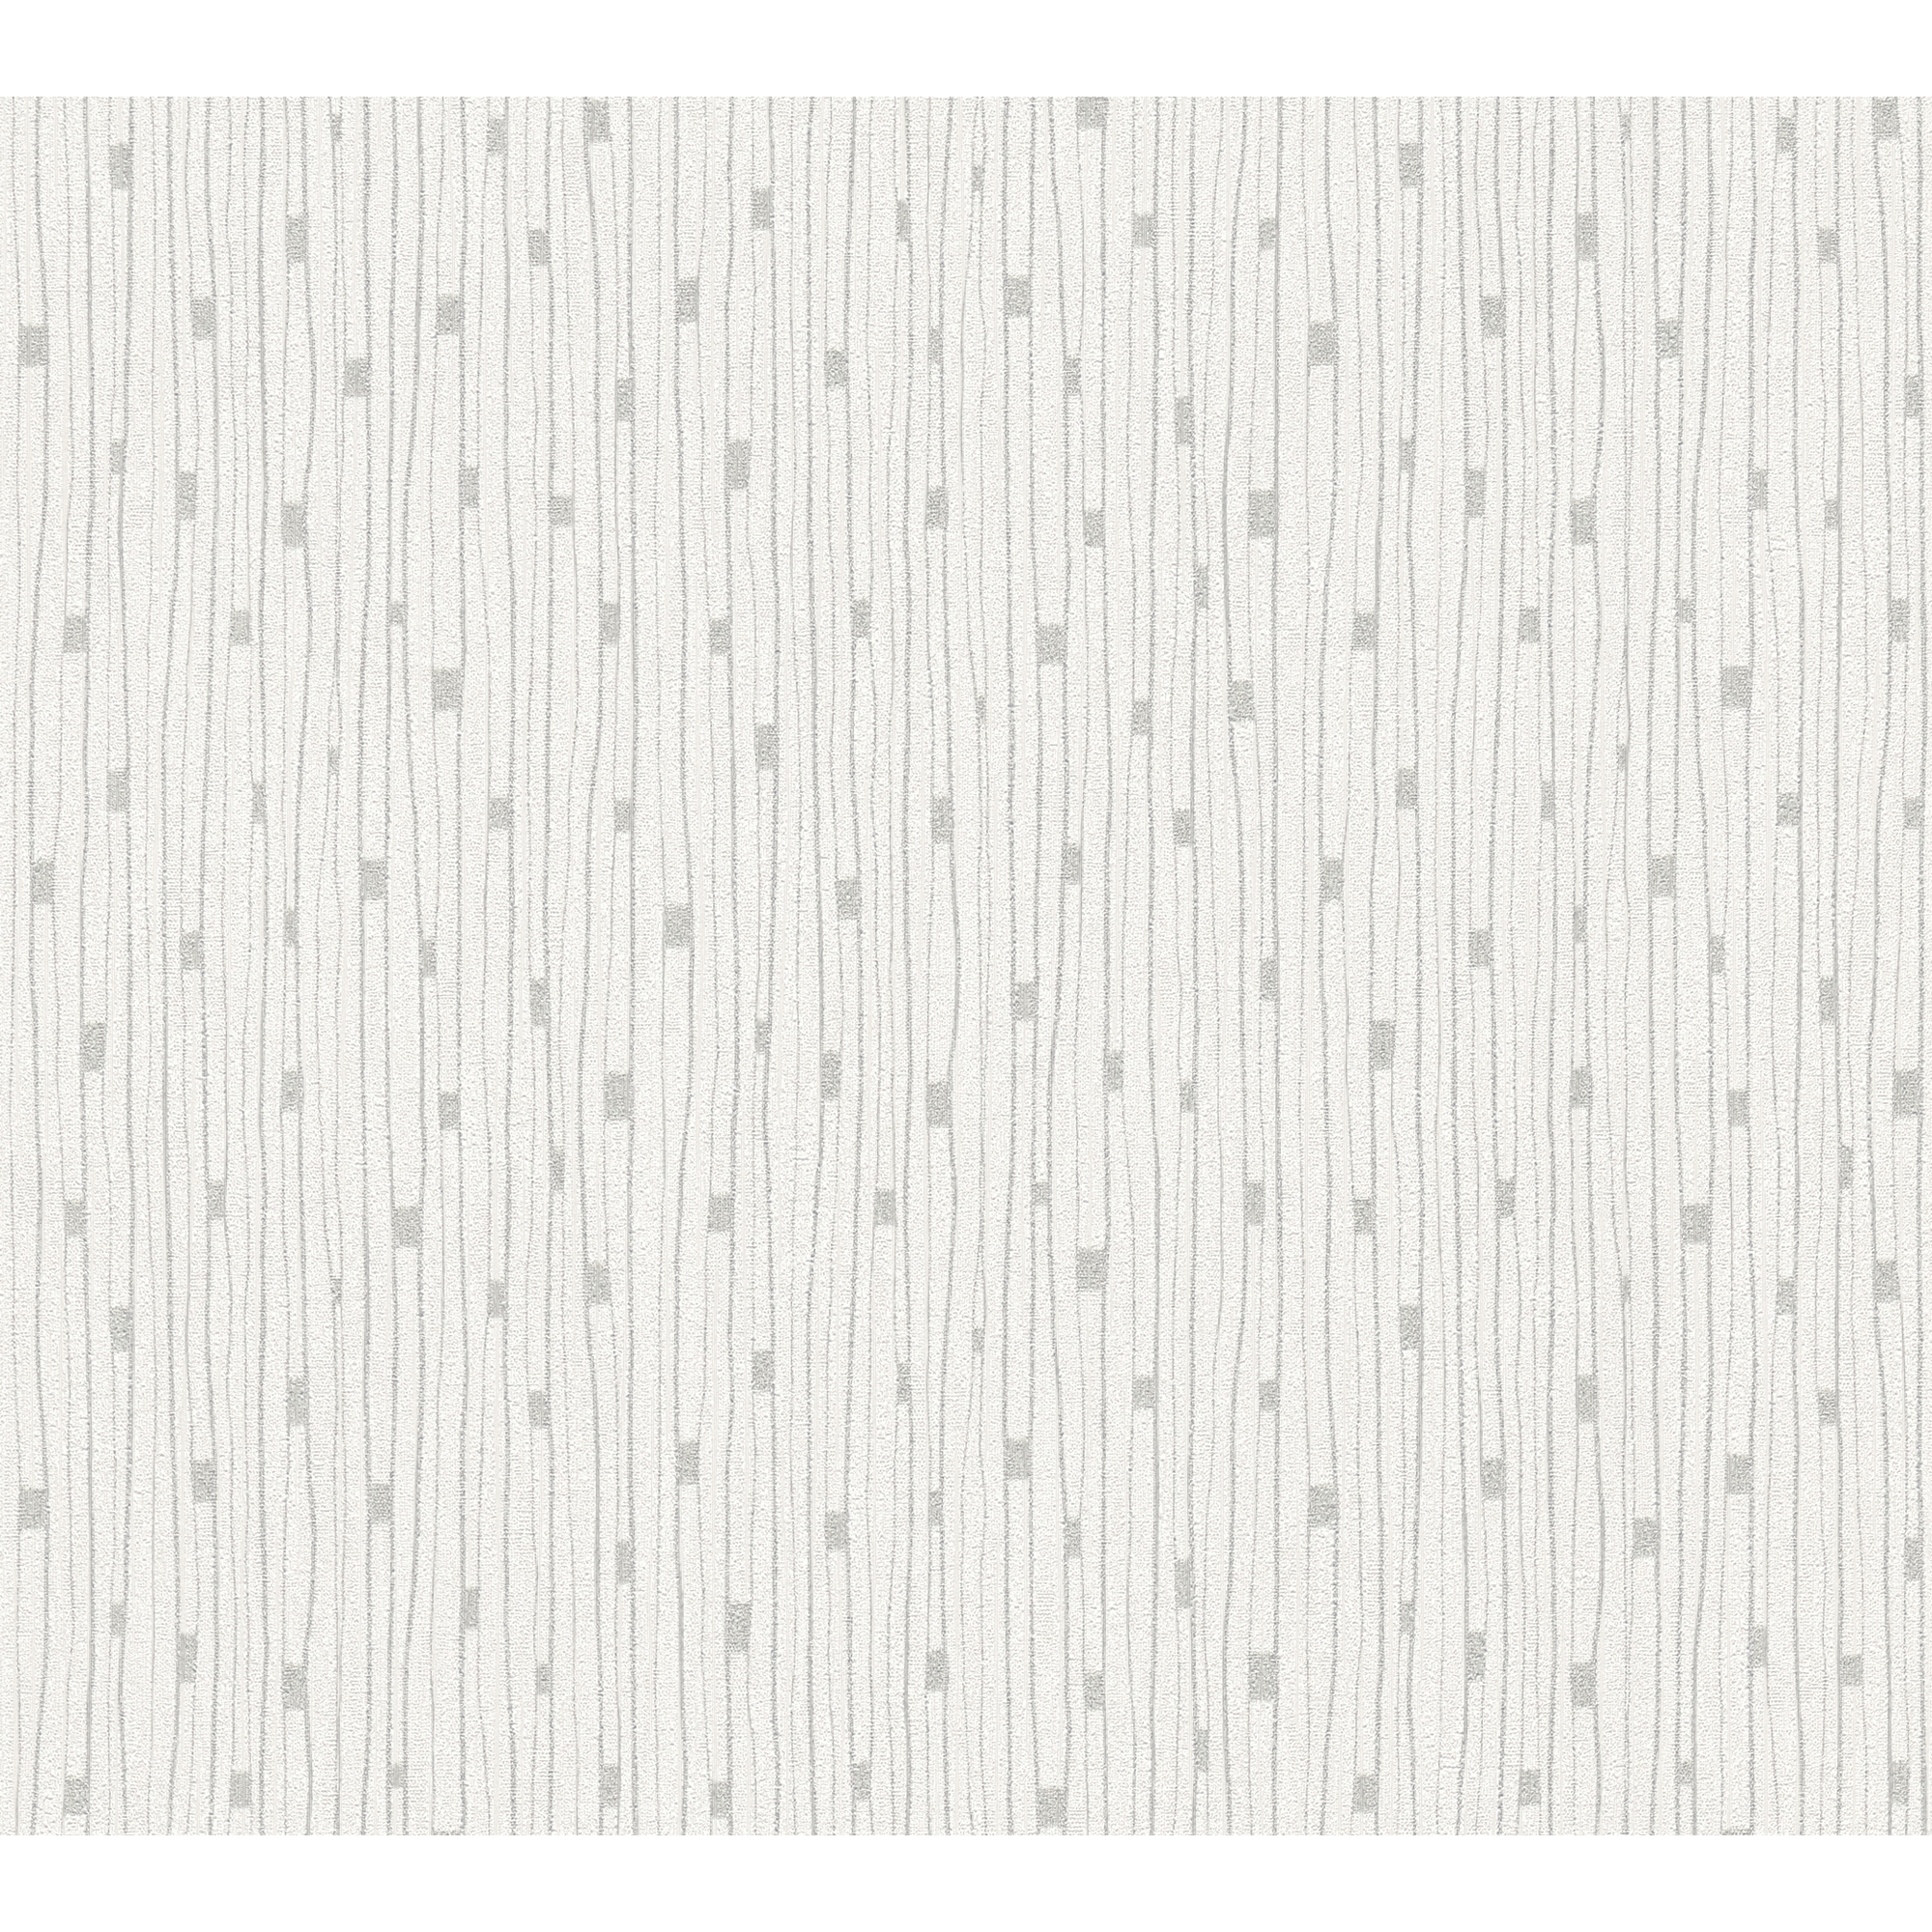 Vliestapete 'The BoS' Linien retro creme/grau 10,05 x 0,53 m + product picture